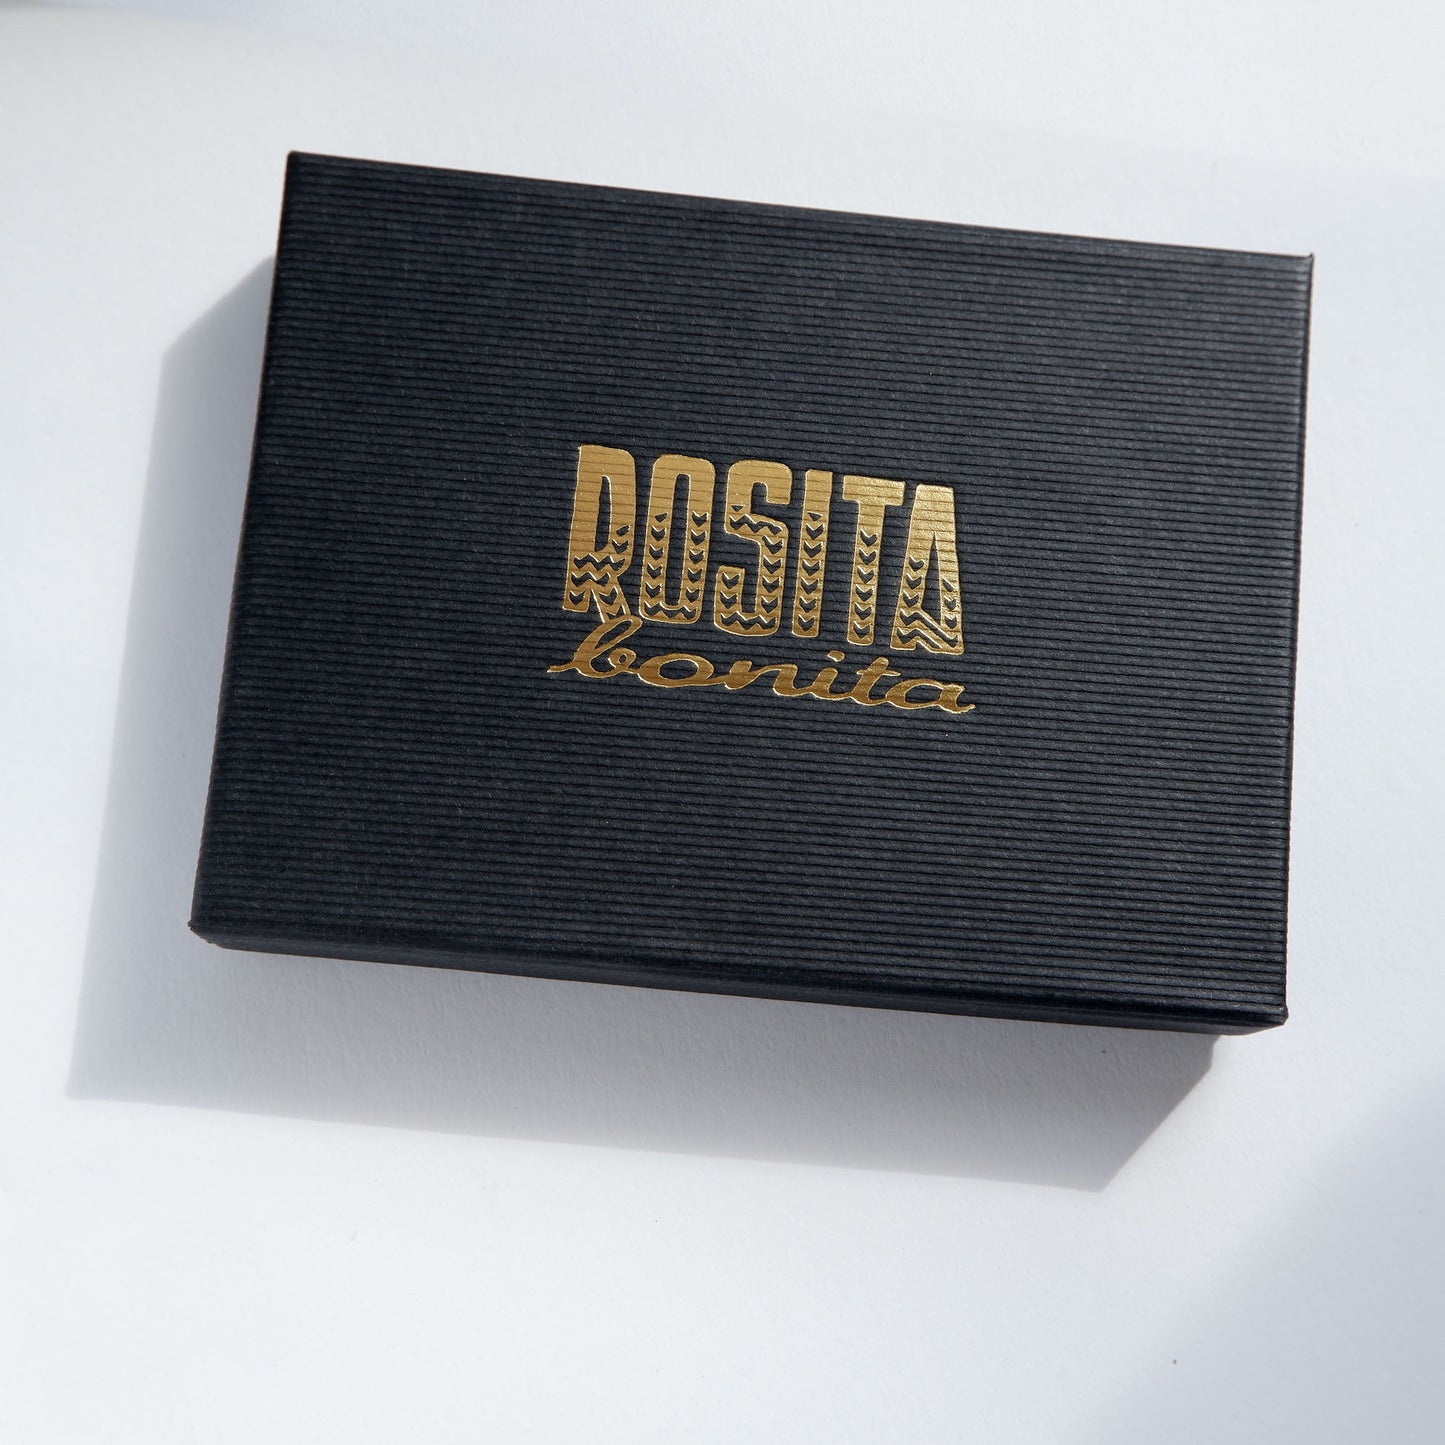 Black pinstripe cardboard box with Rosita Bonita logo in gold